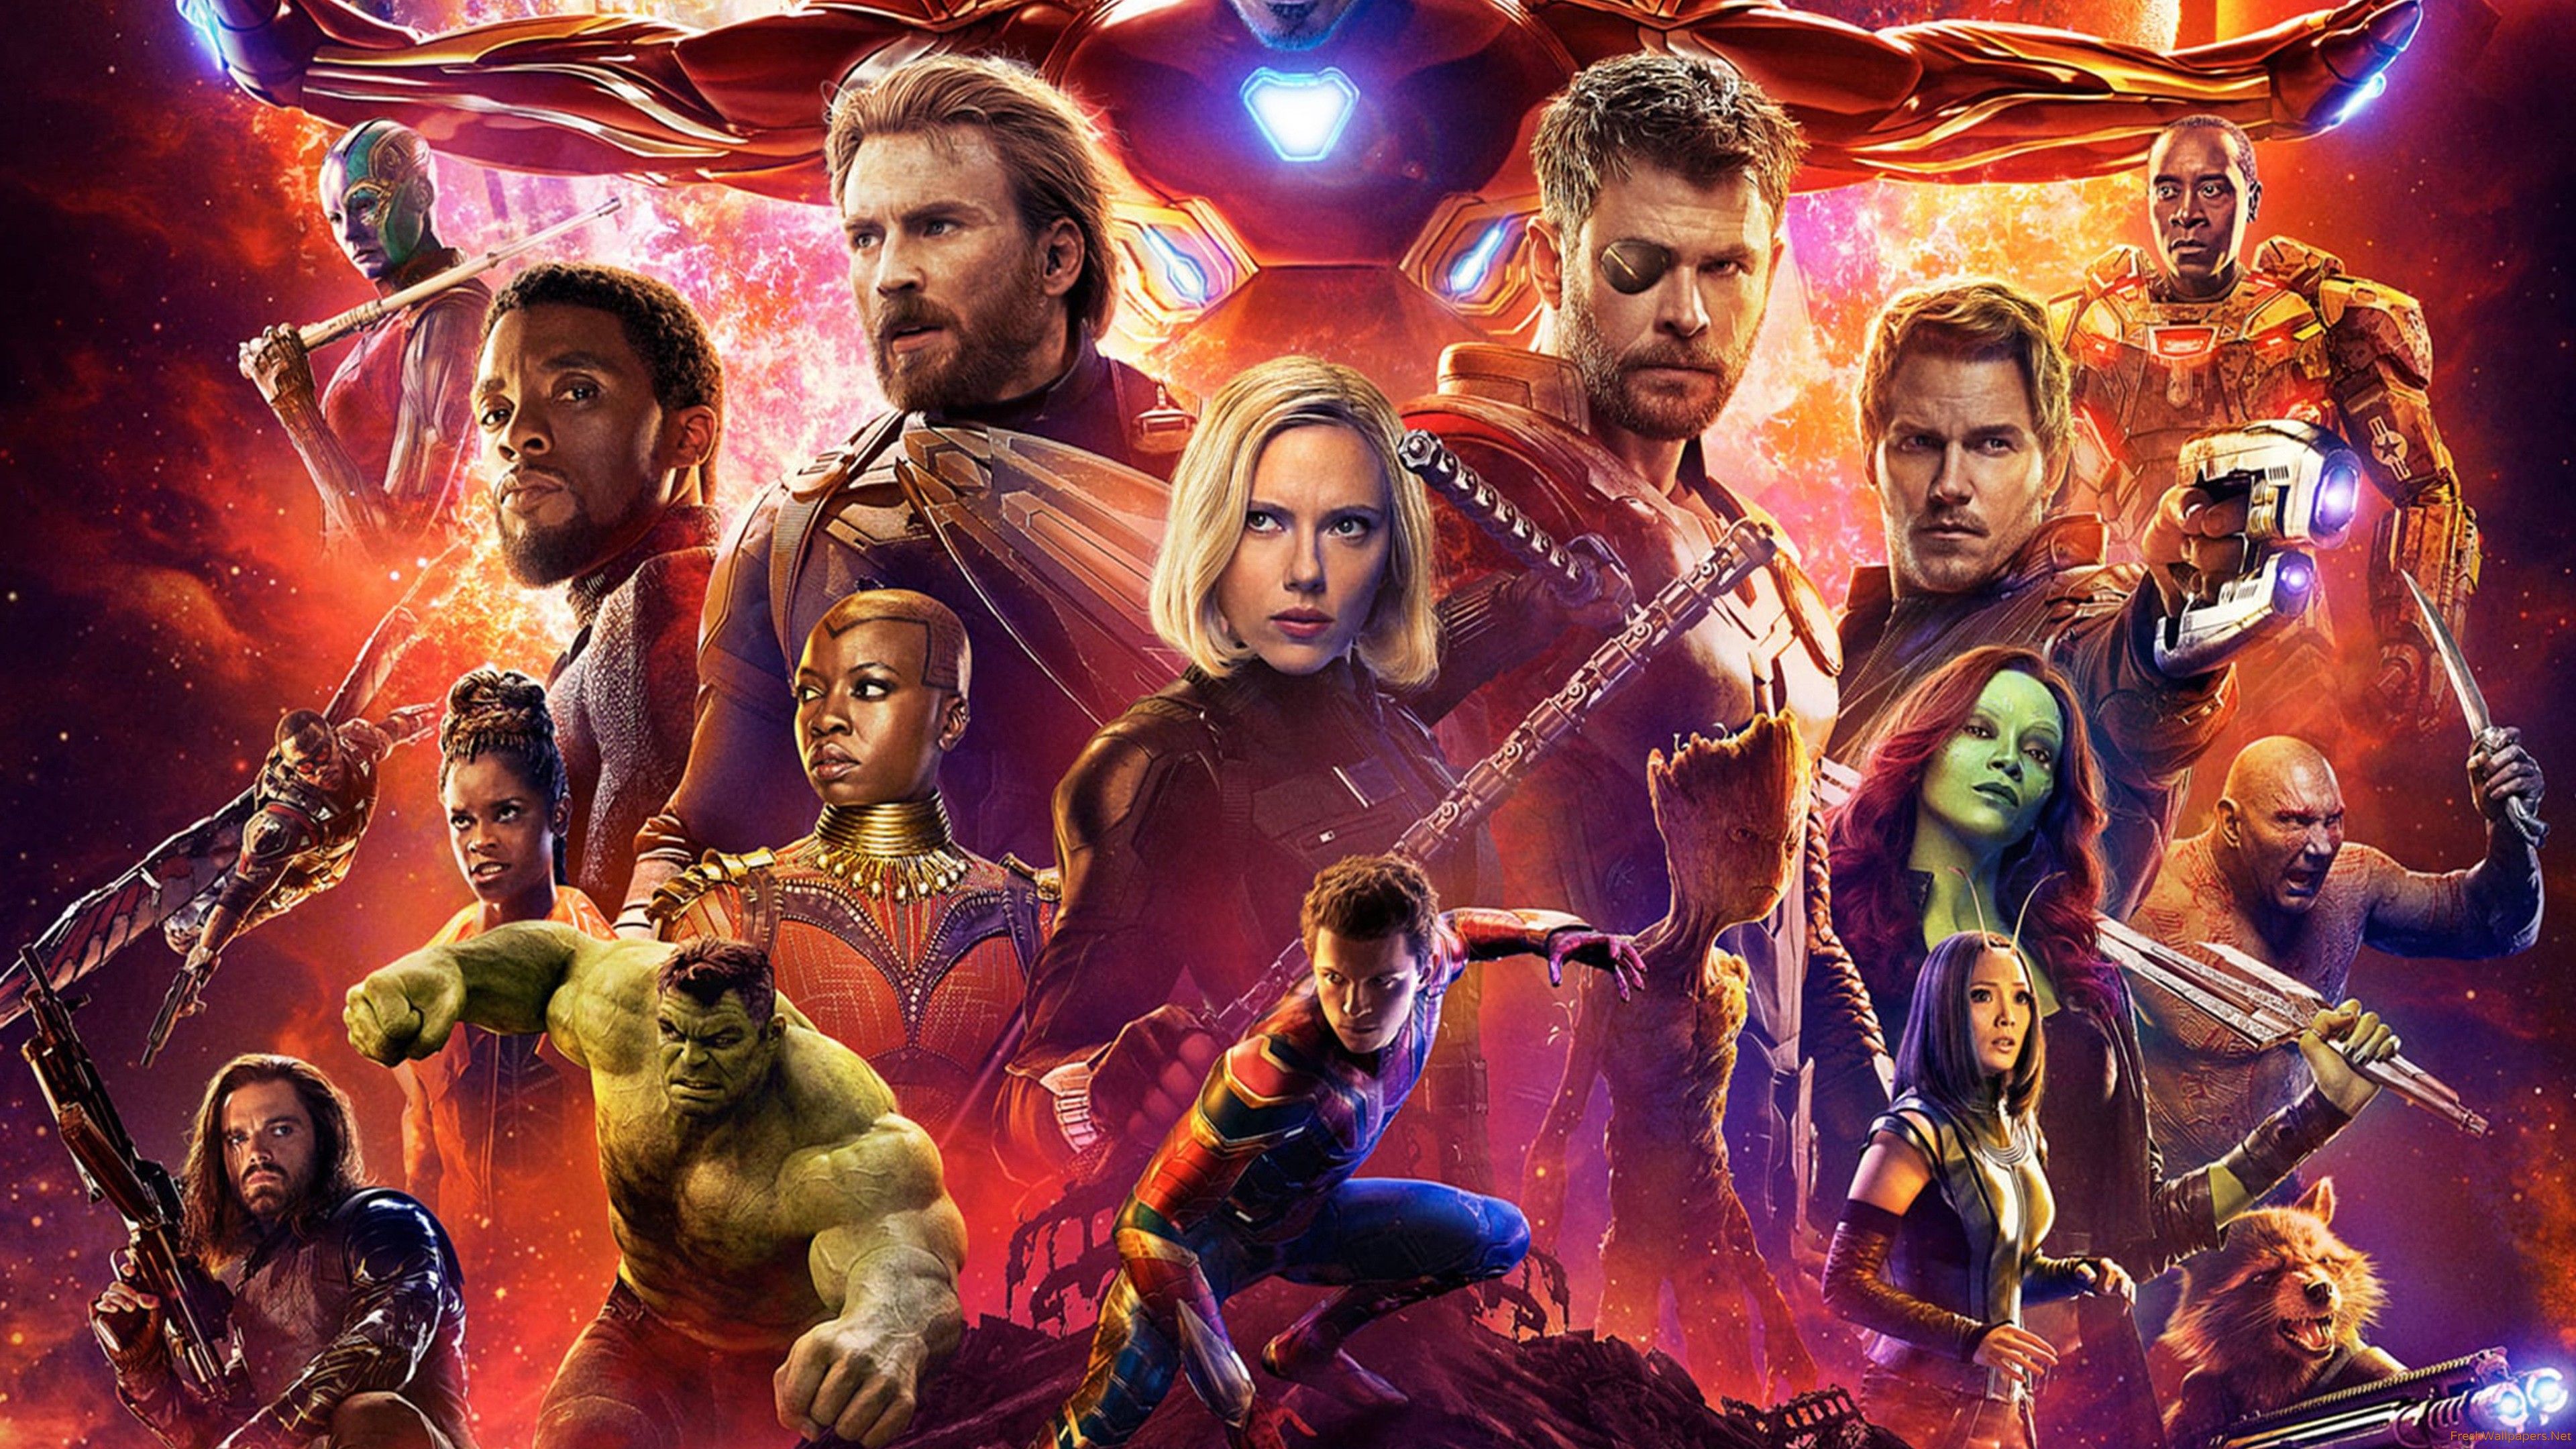 Avengers Infinity War 2018 Poster 4k fondos de pantalla | Papeles pintados frescos